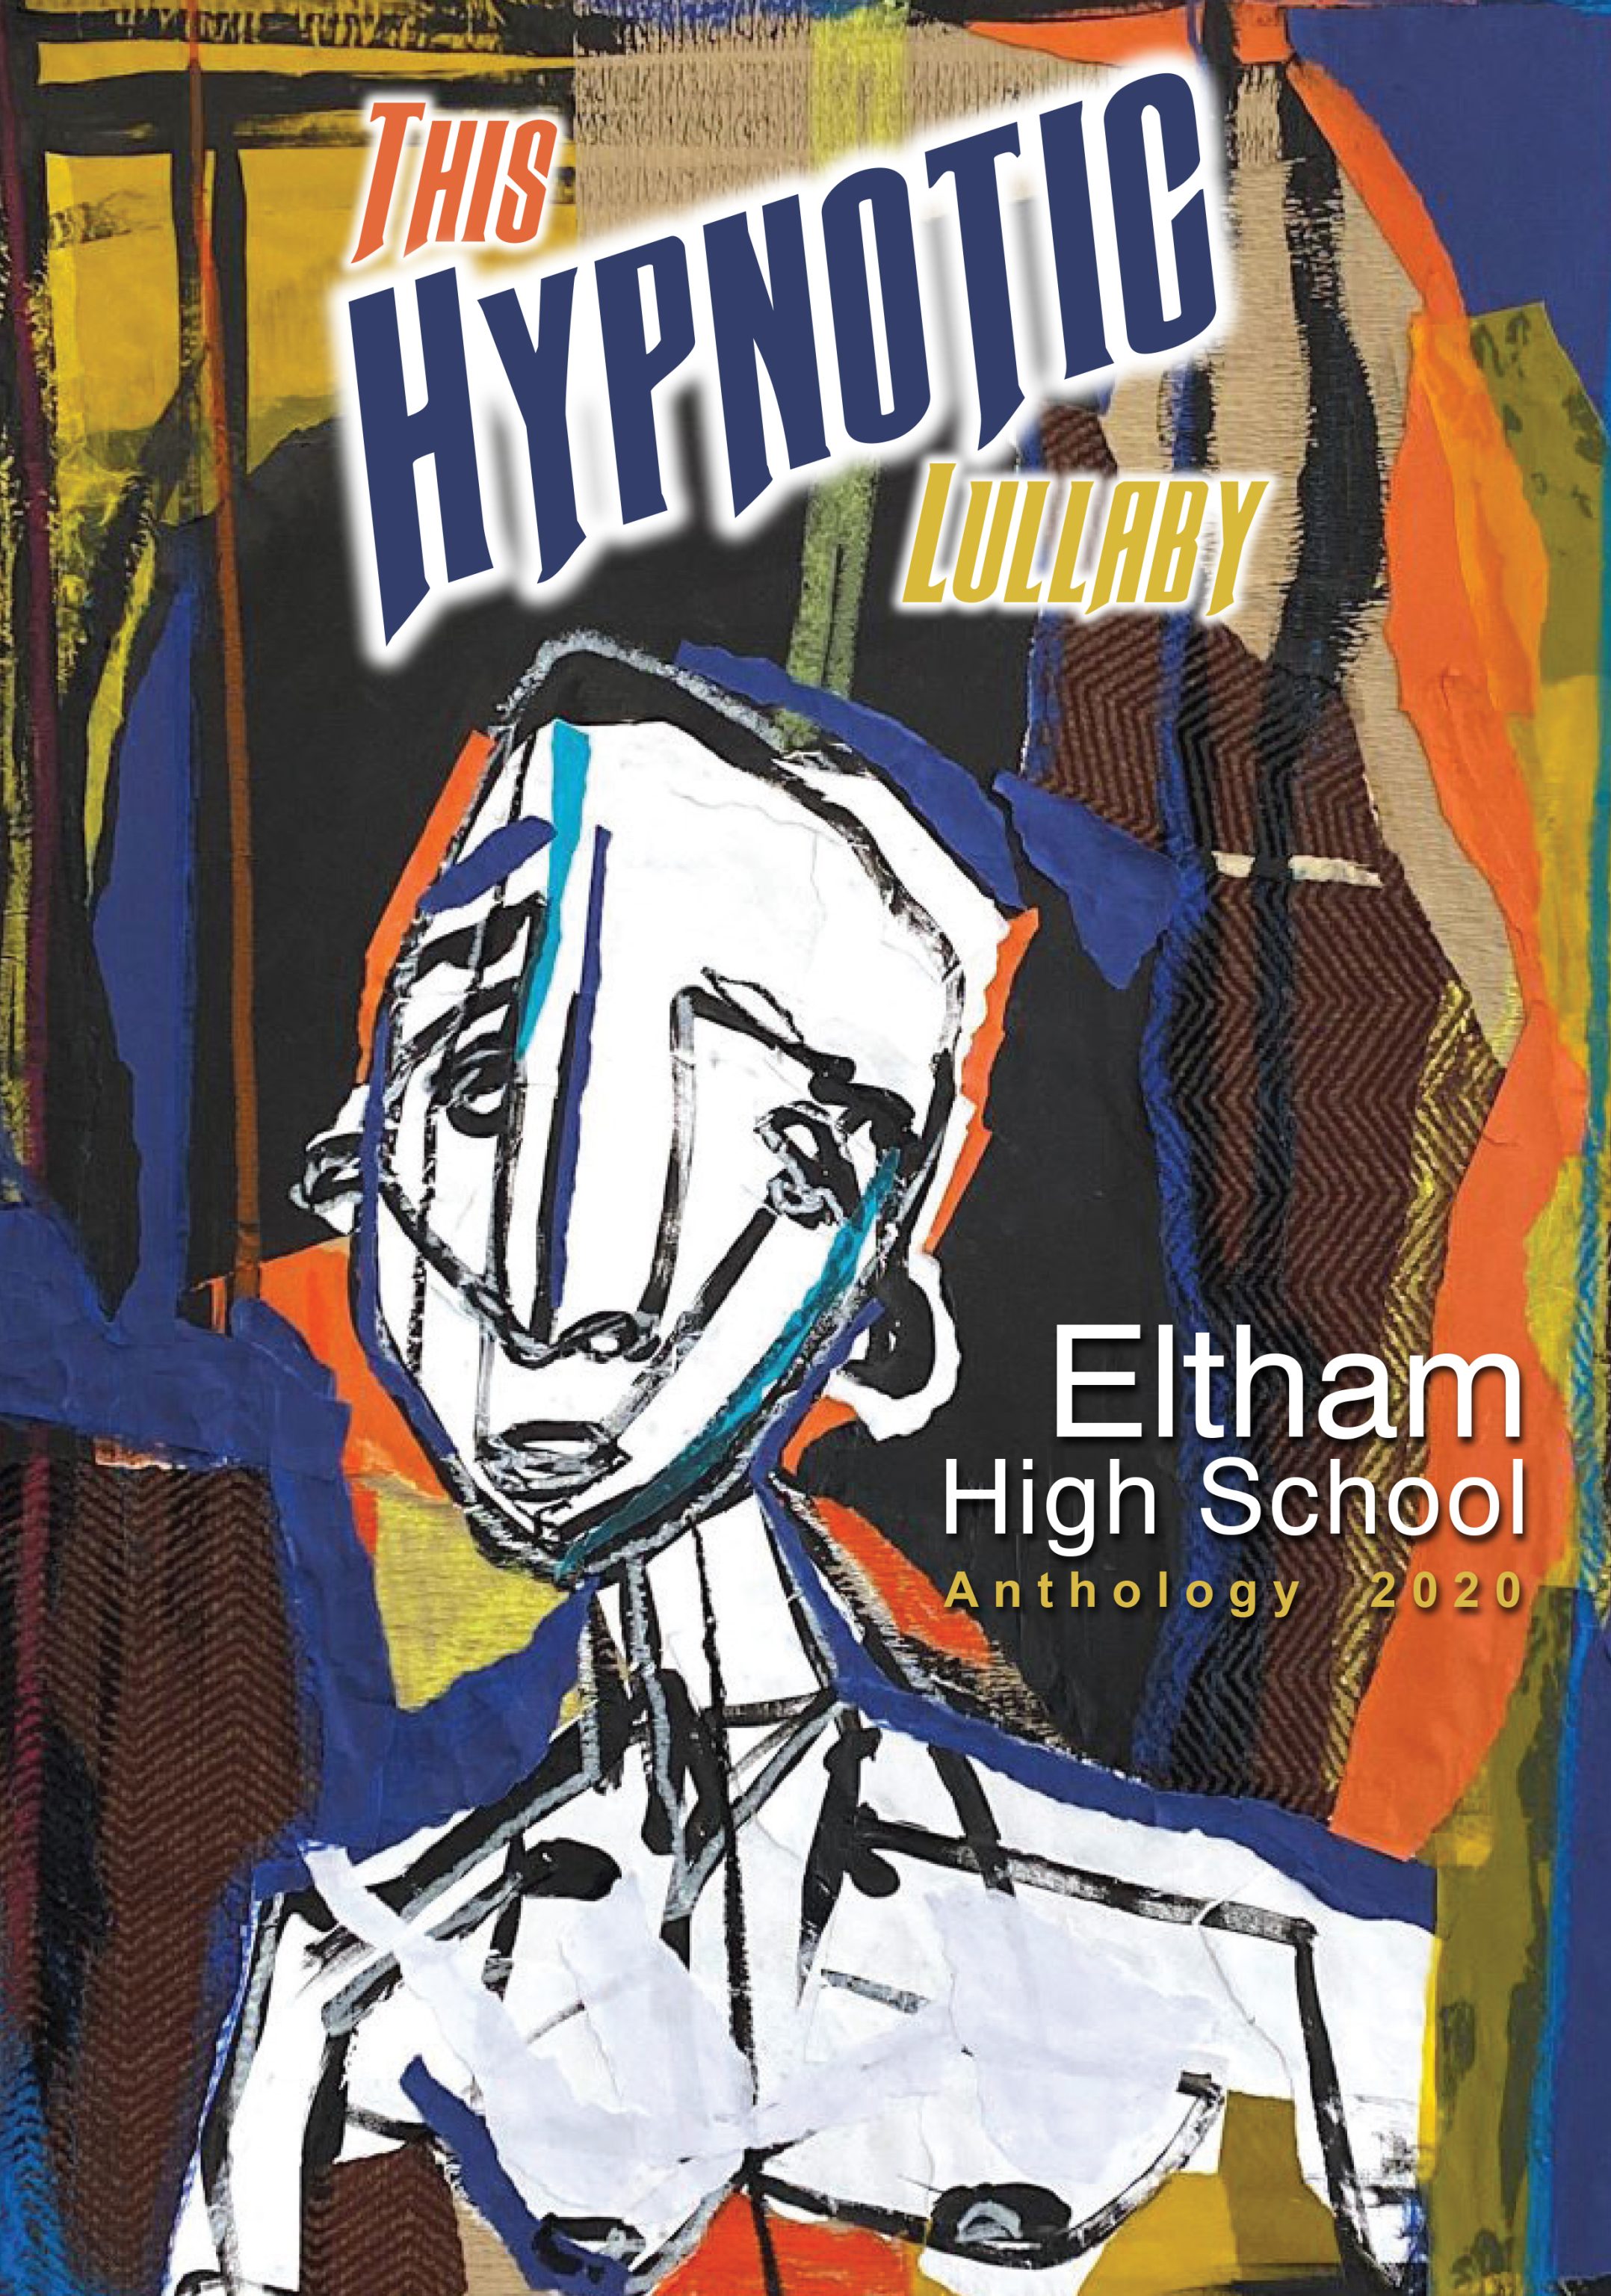 Eltham High School Anthology 2020: The Hypnotic Lullaby